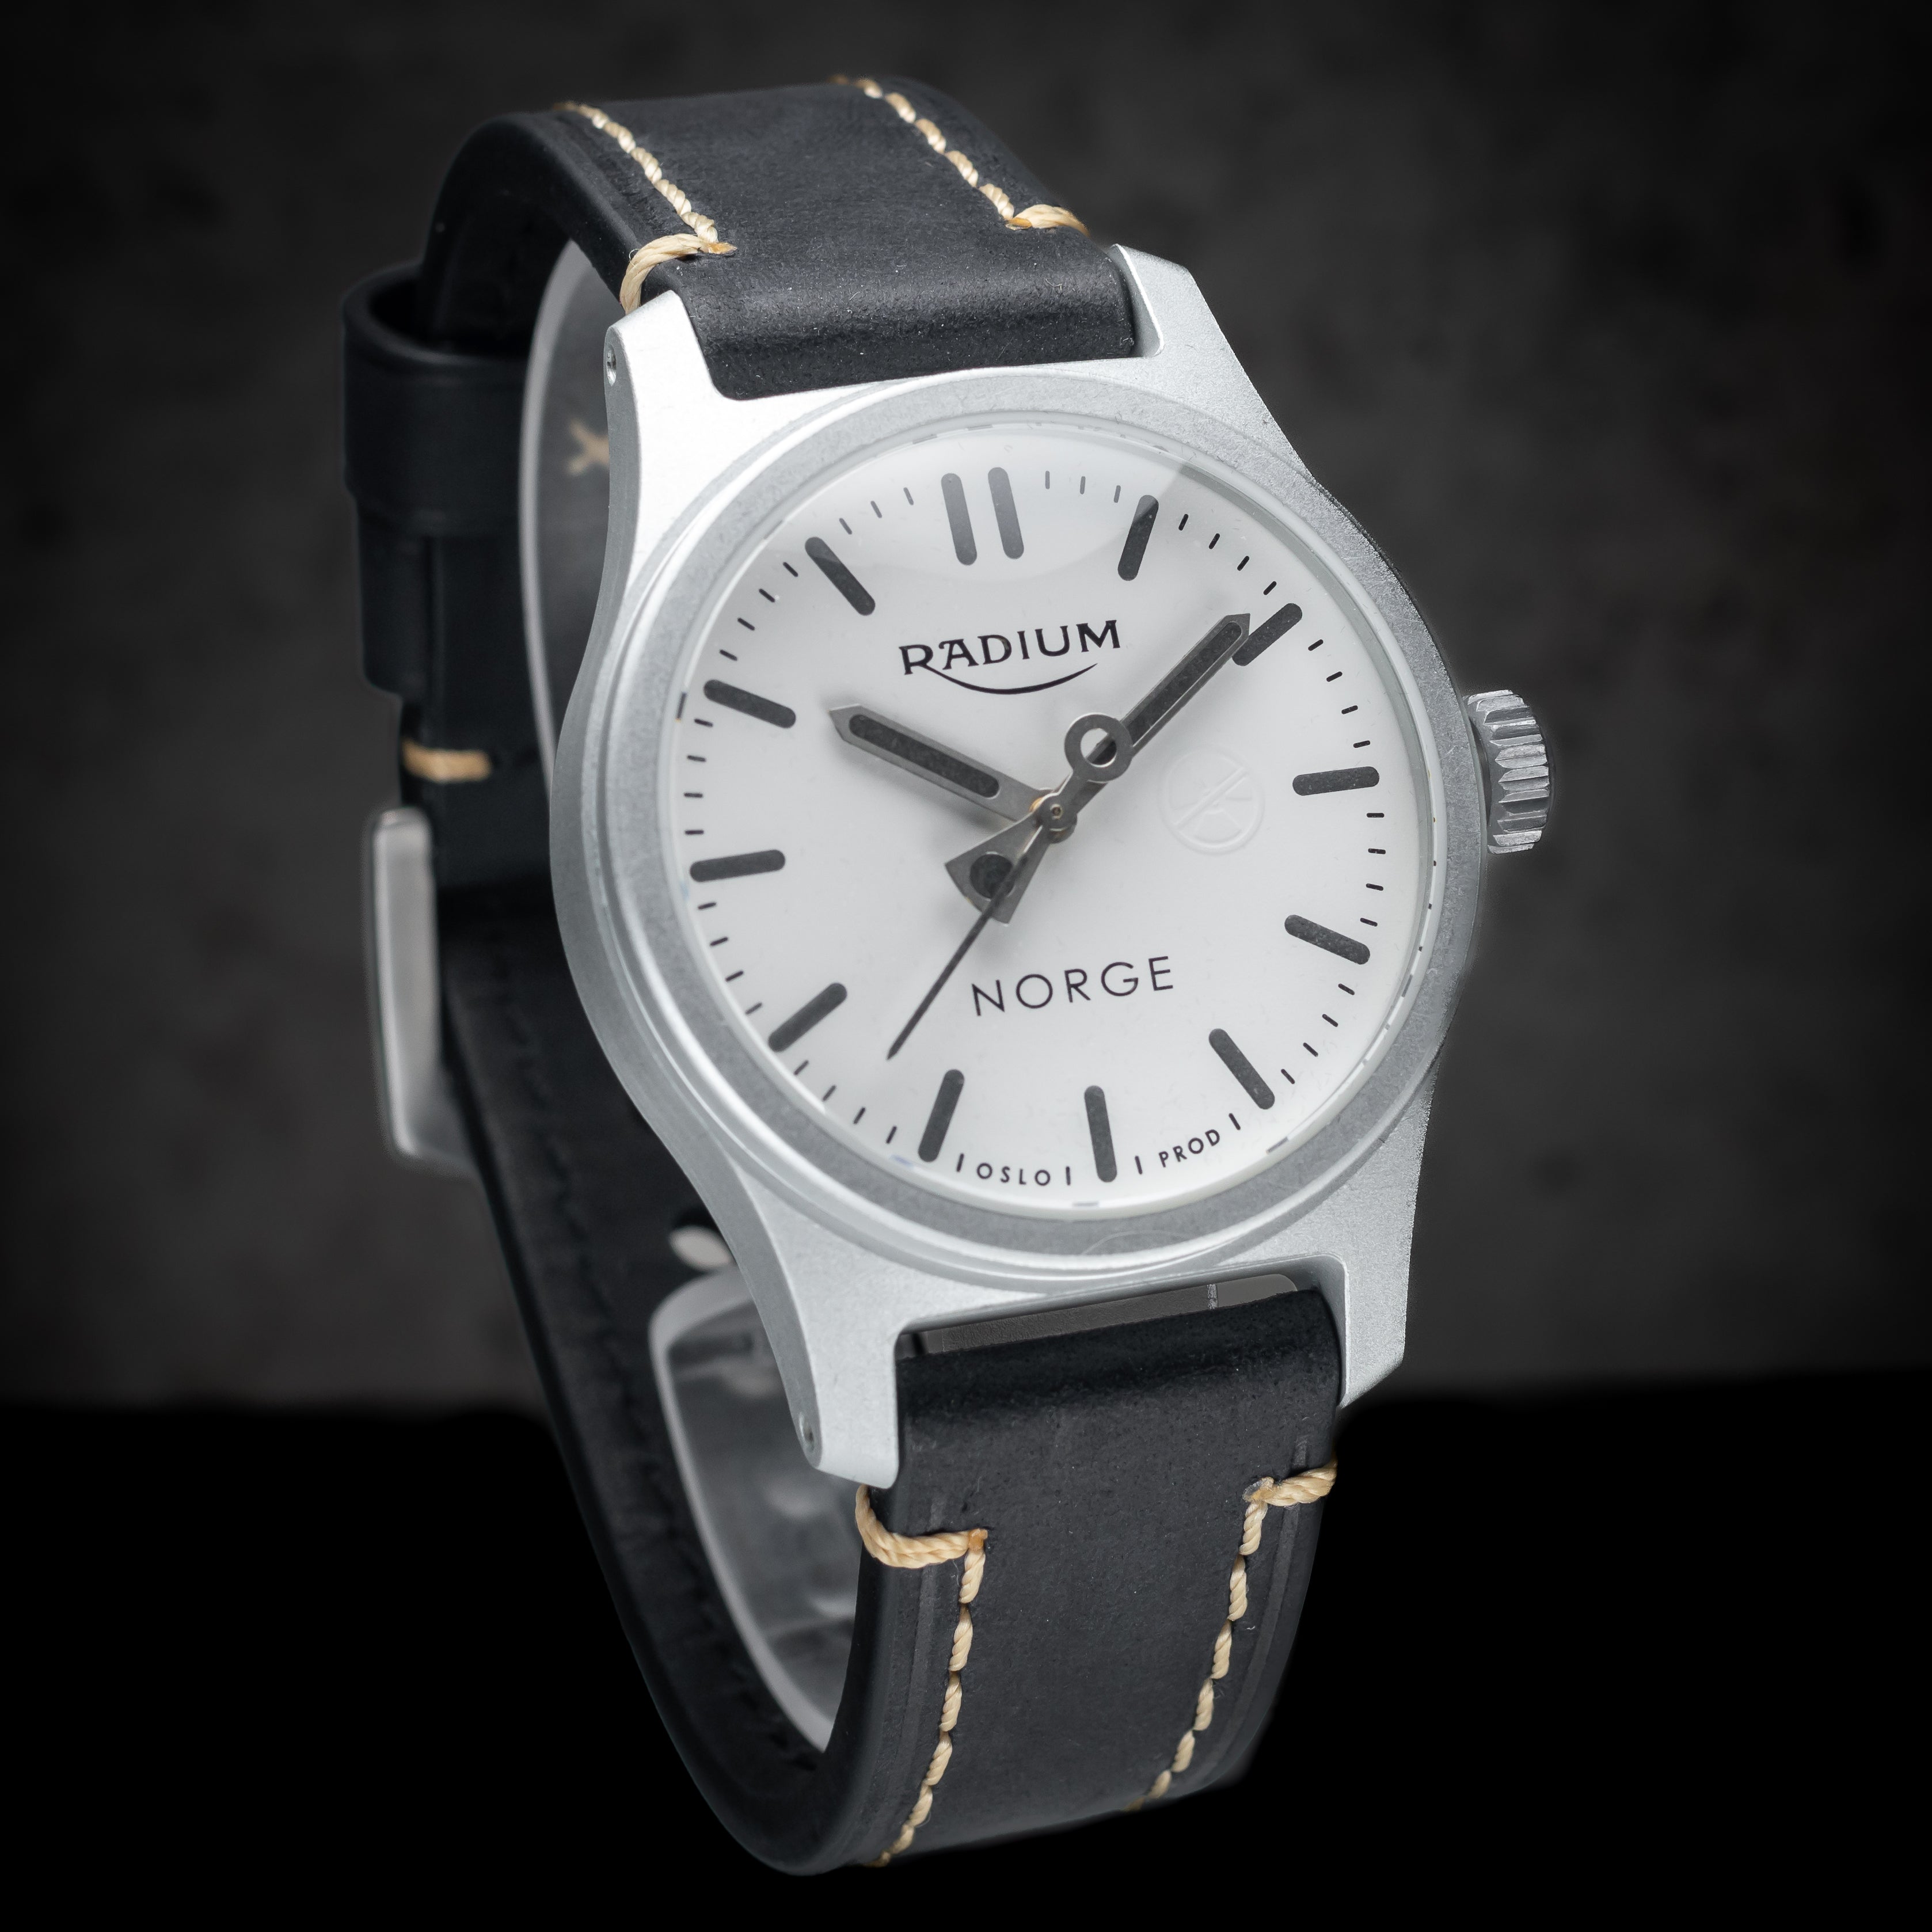 .38 Original Radium: The Iconic Timepiece, nå med minuttmarkeringer